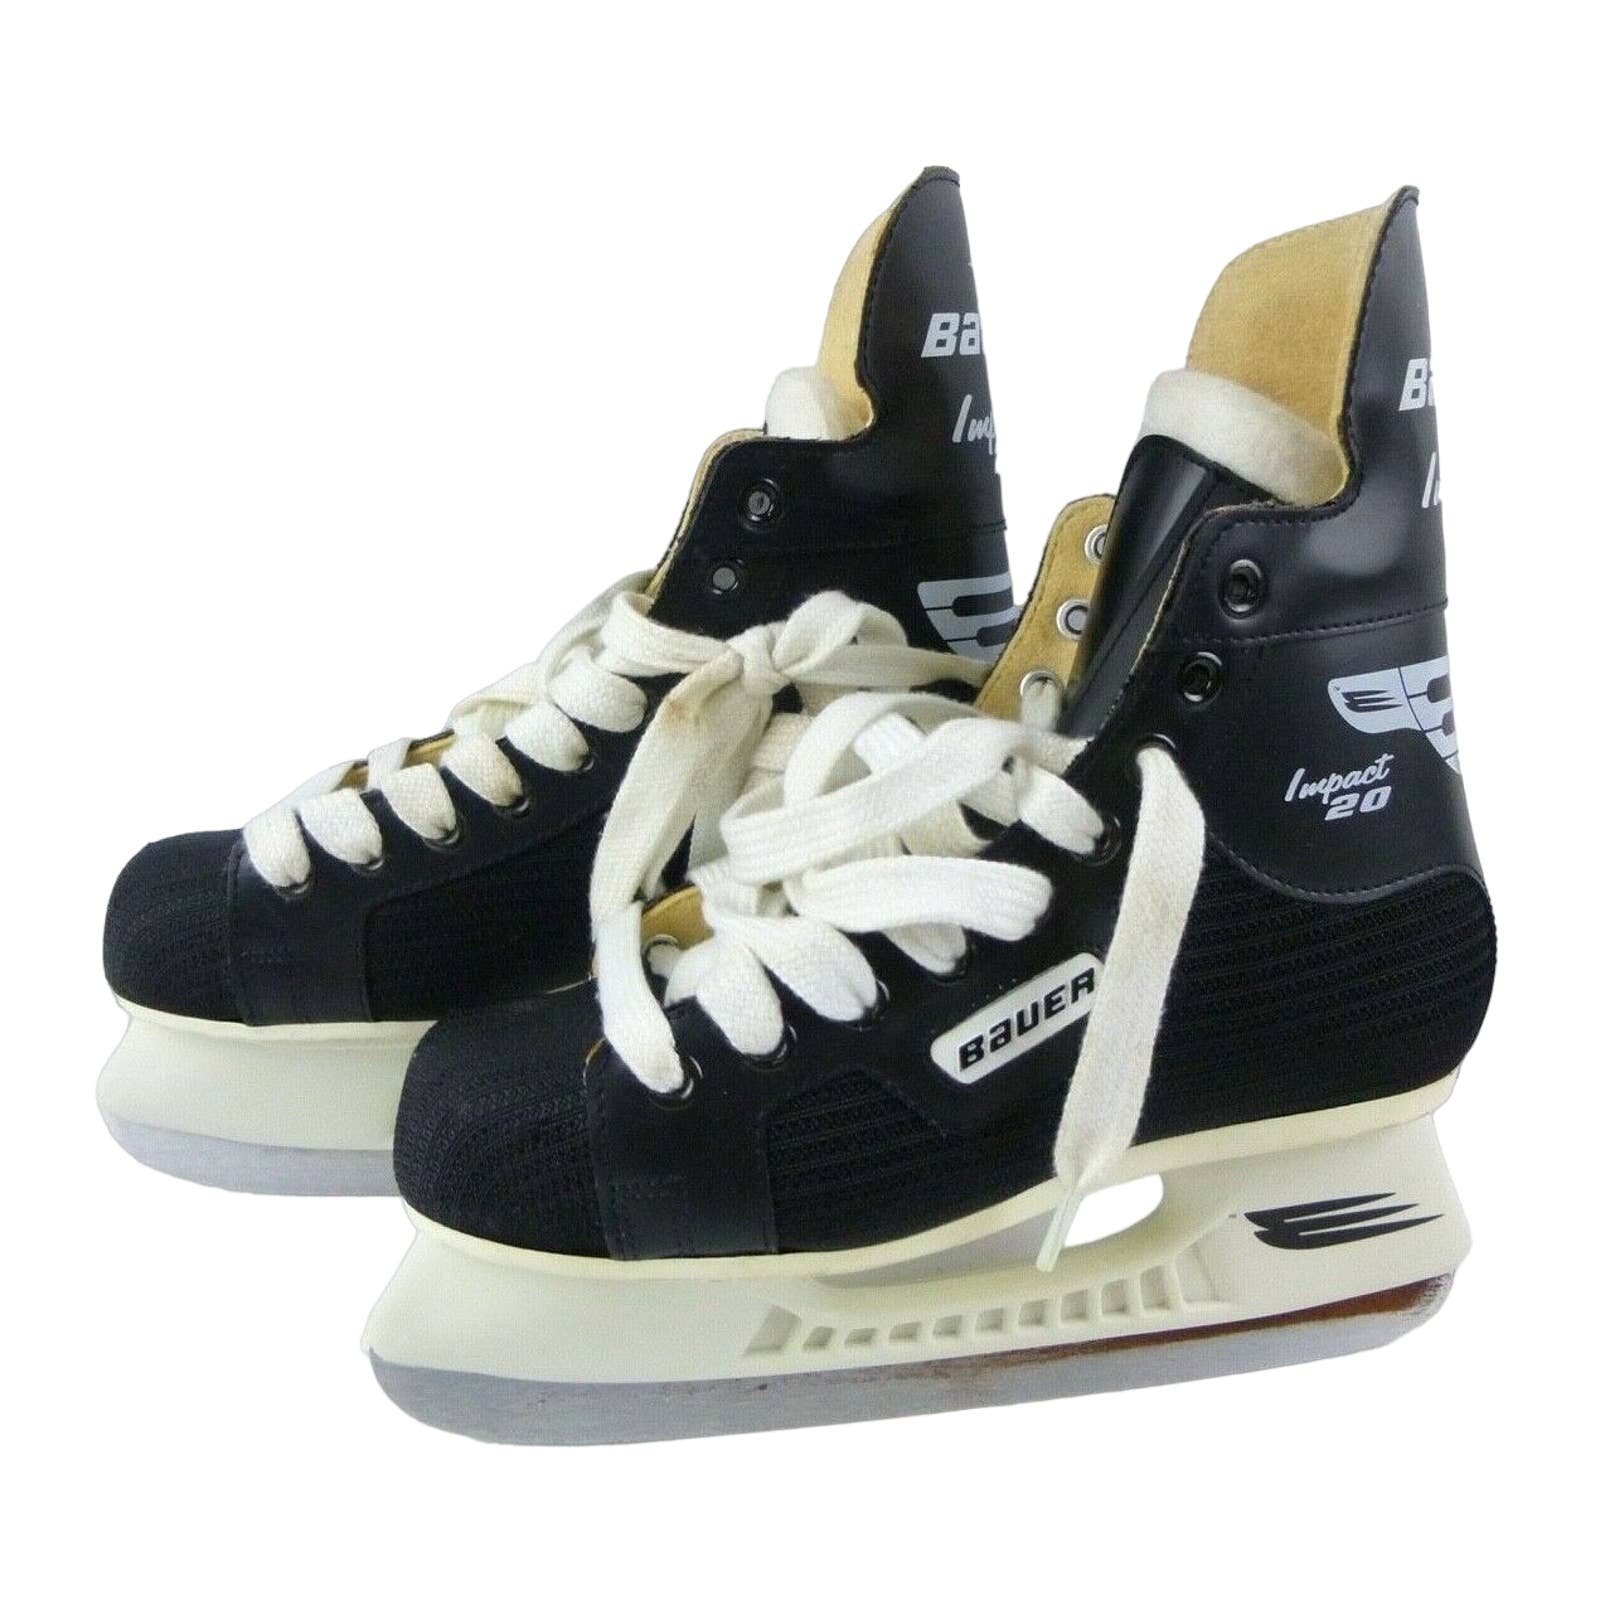 Bauer Hockey Ice Skates Impact 20 Shoes Festool Blades Size M 4 8UN9tMJAT